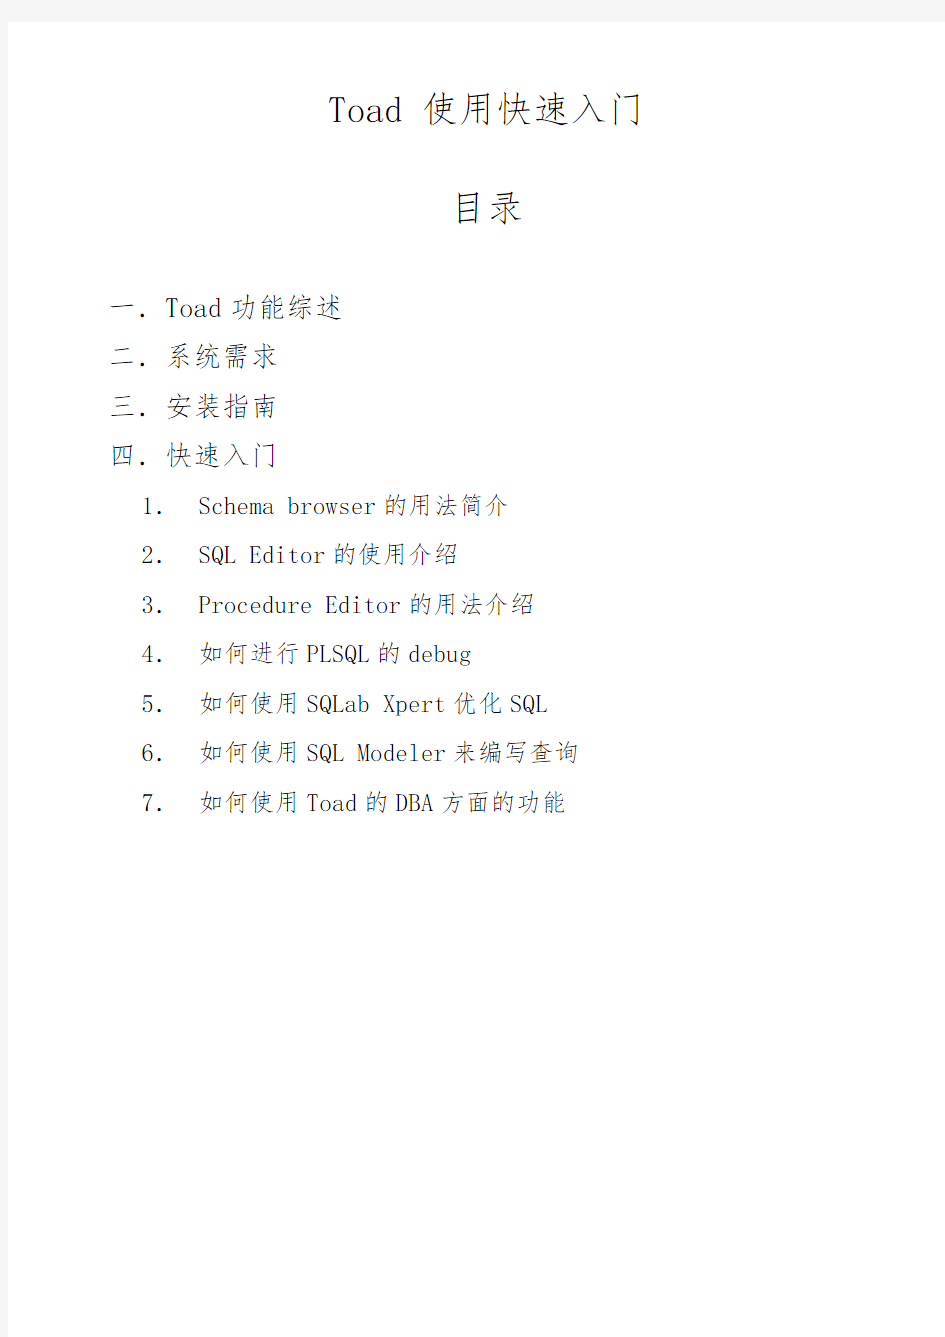 Toad中文文档和用户手册范本